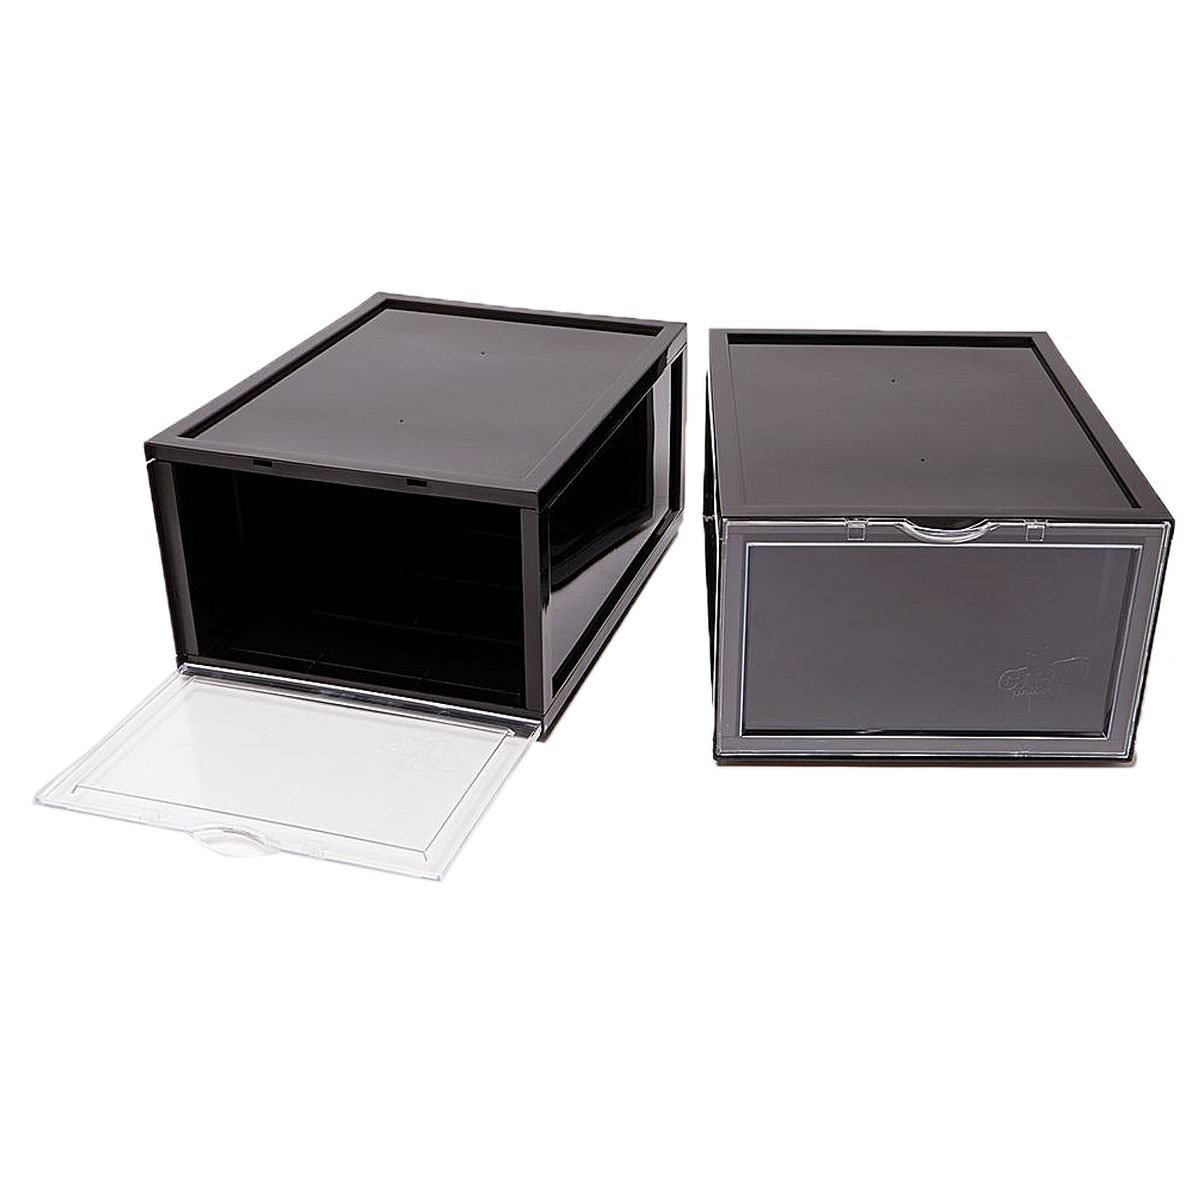 crep protect box dimensions